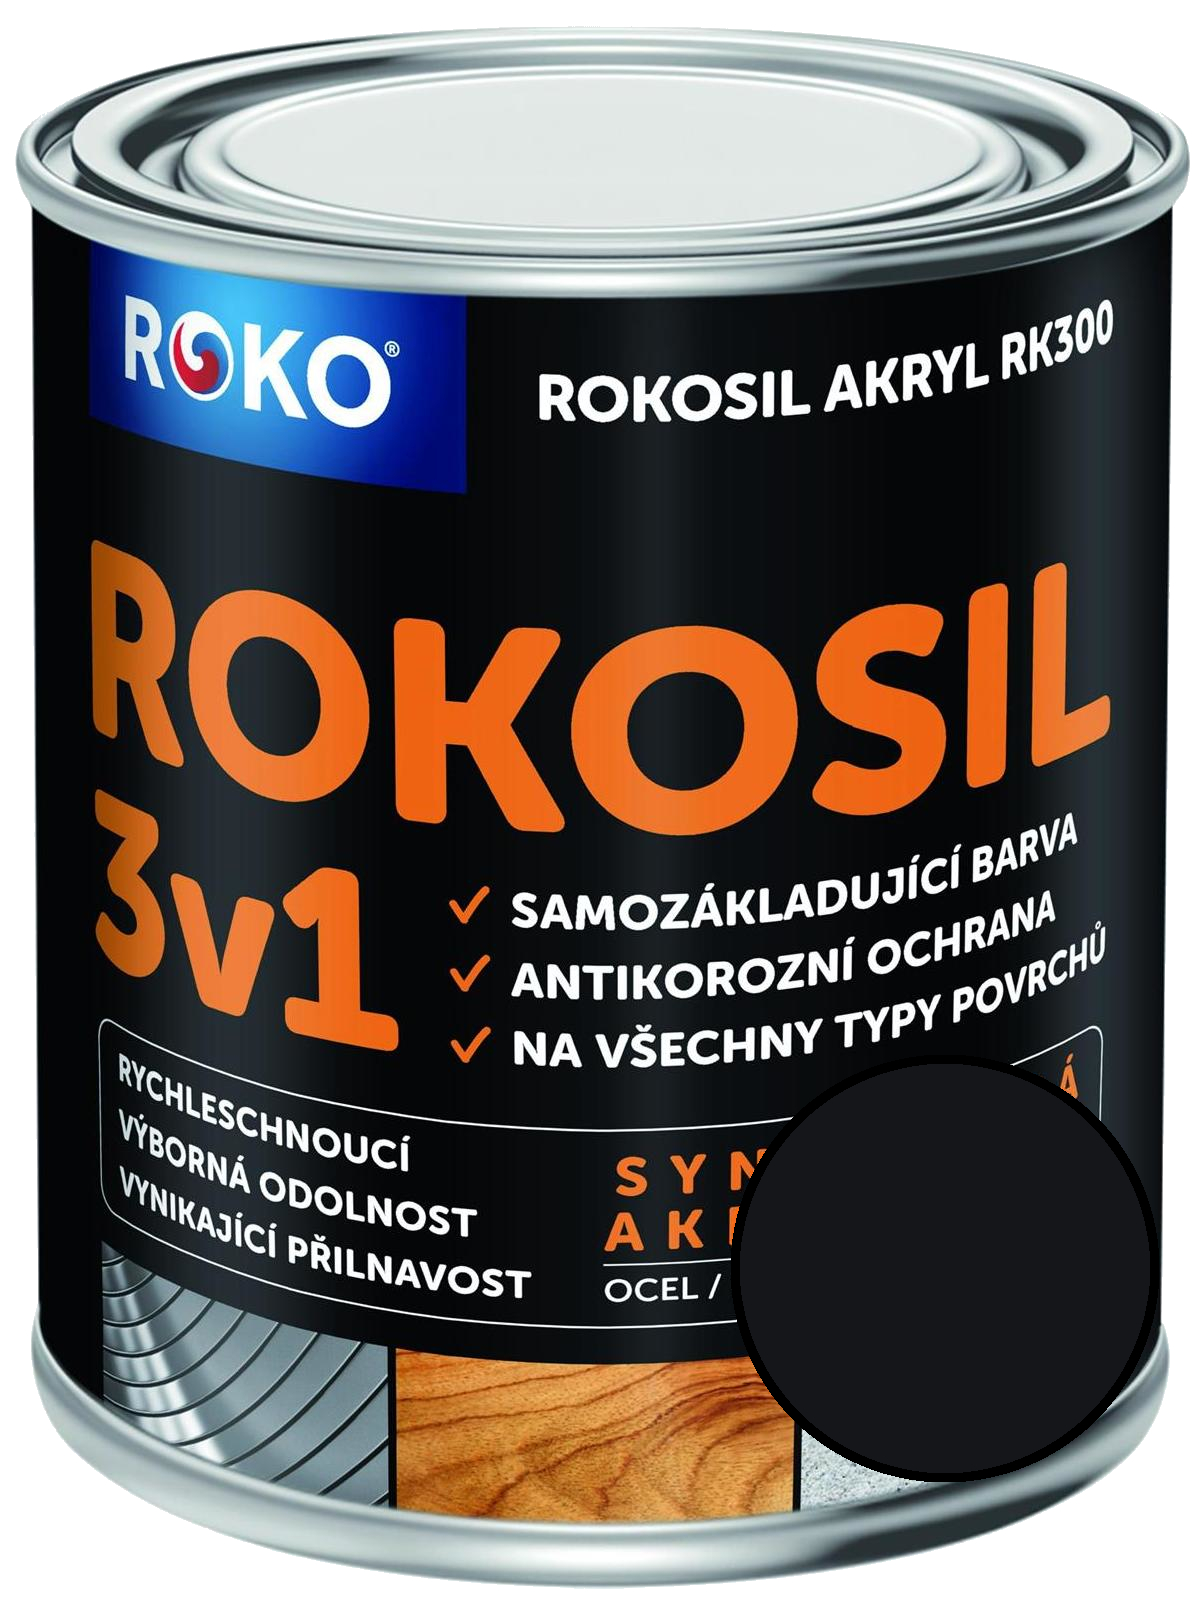 Barva samozákladující Rokosil akryl 3v1 RK 300 1999 černá mat, 3 l